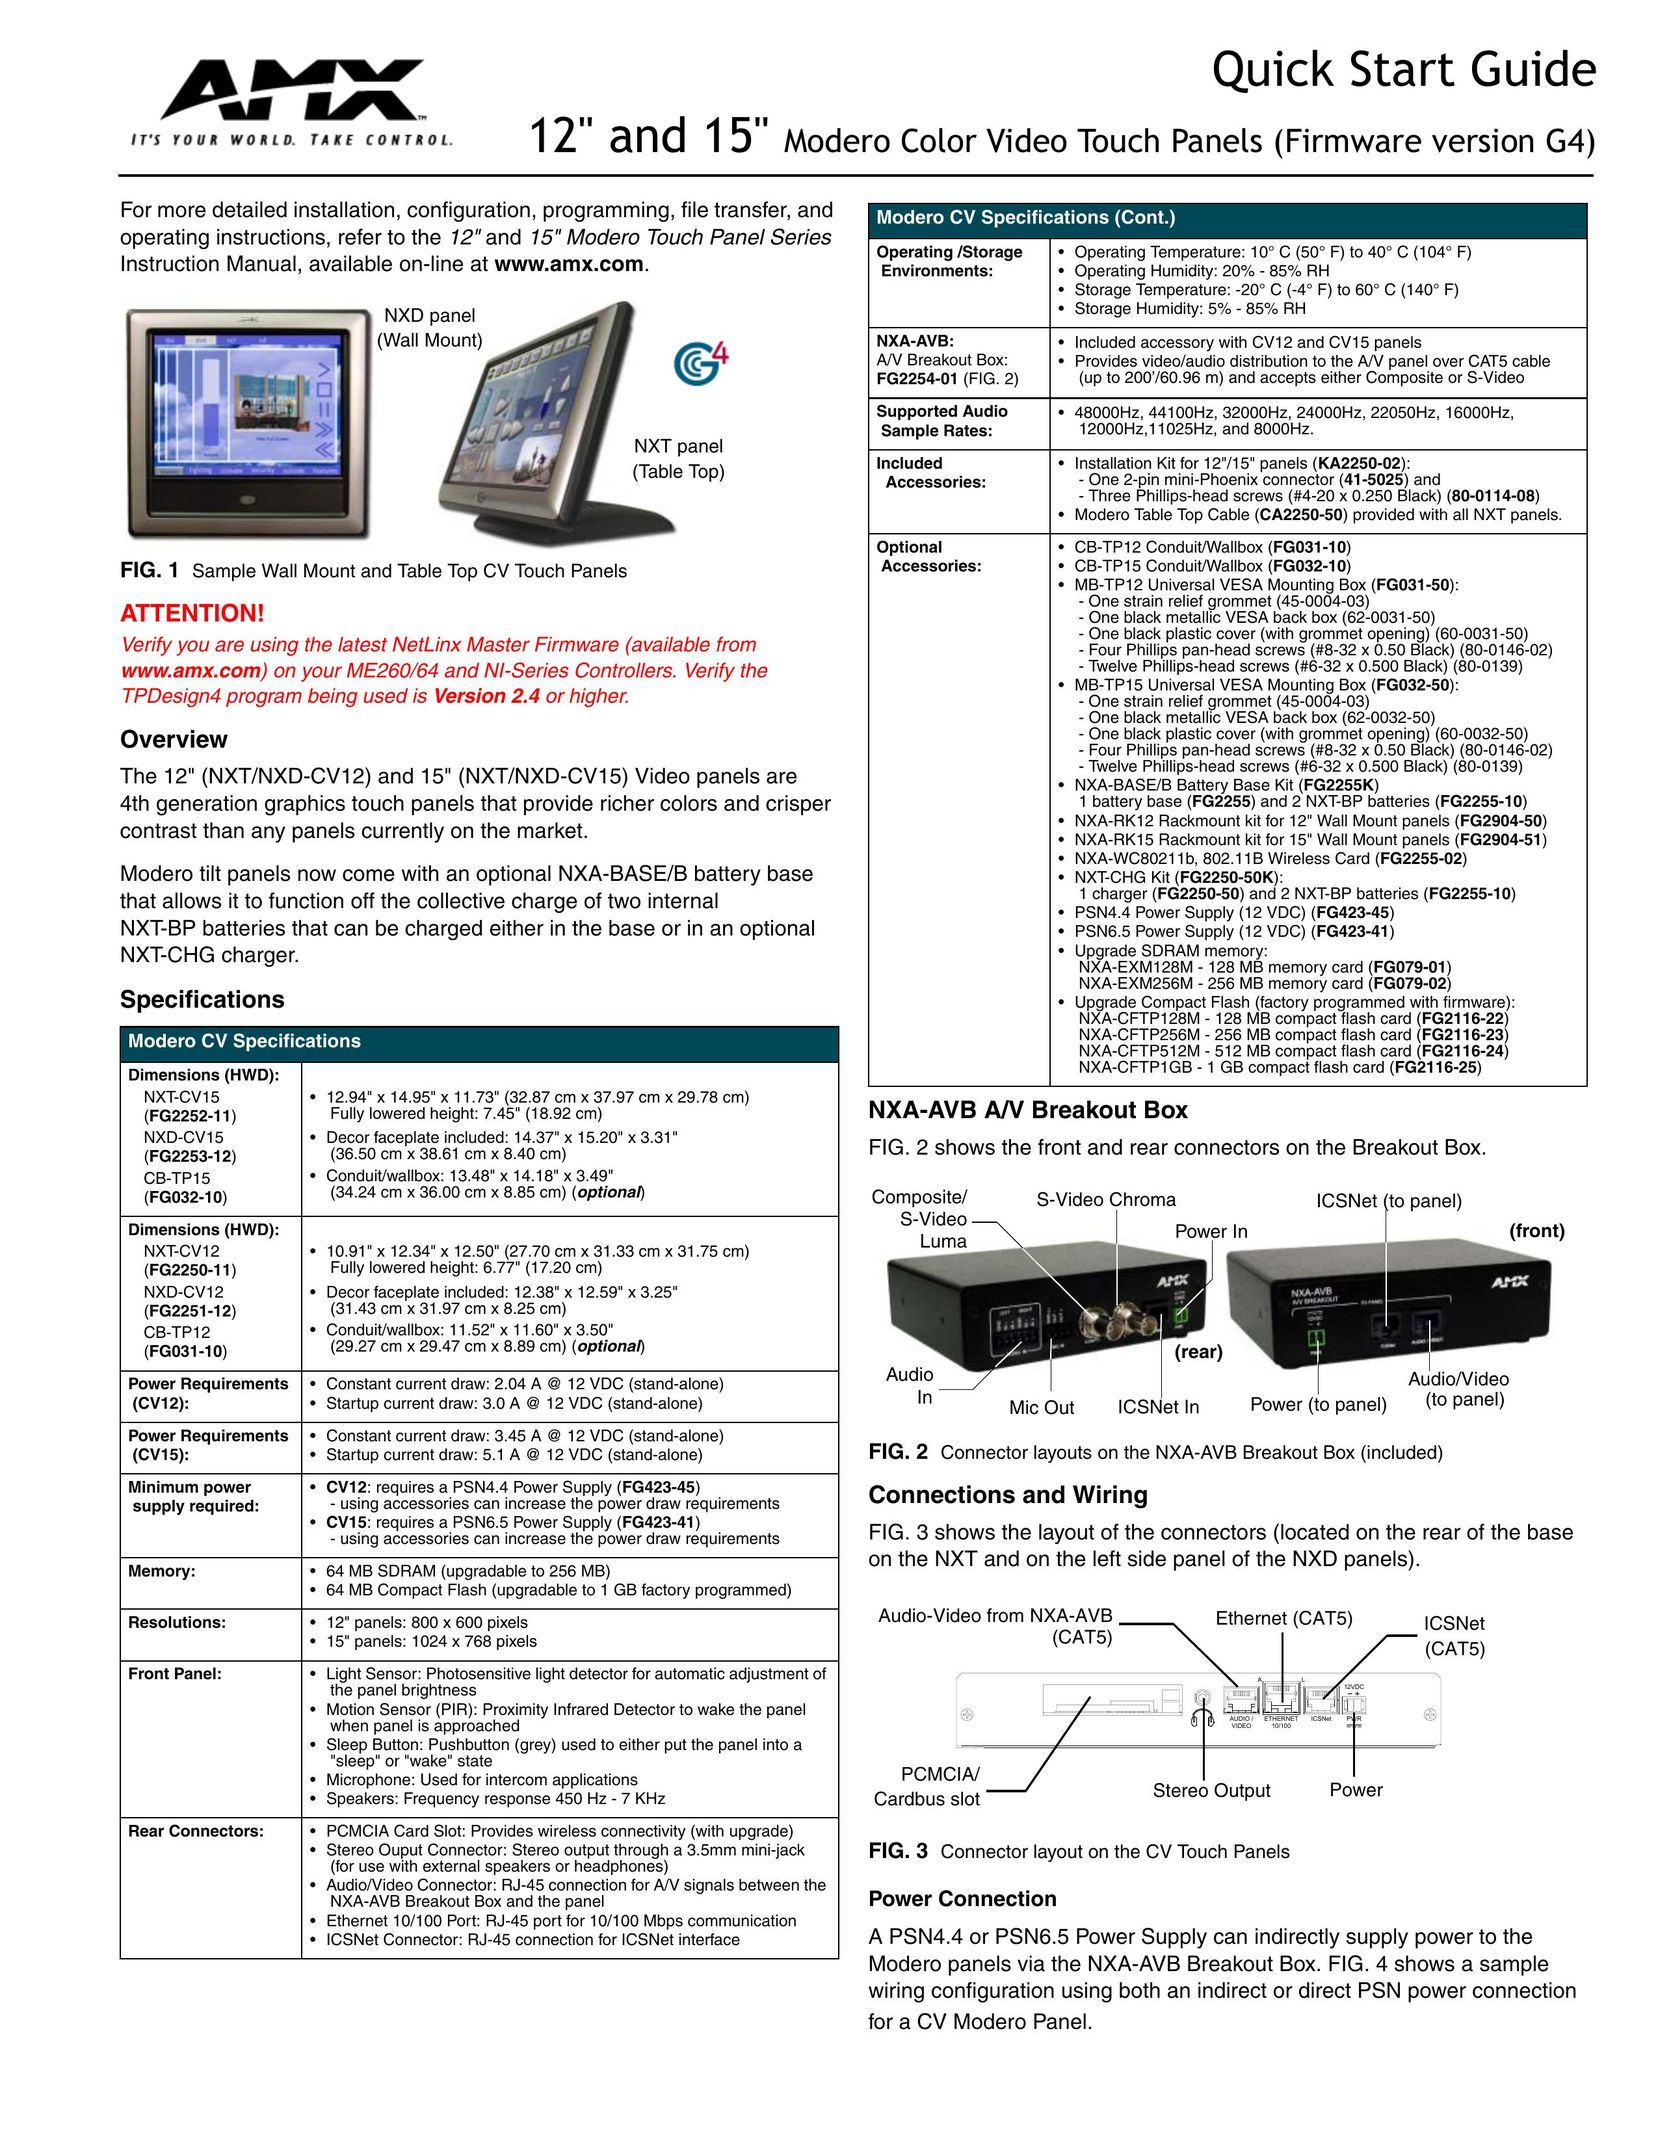 AMX Firmware version G4 Car Video System User Manual